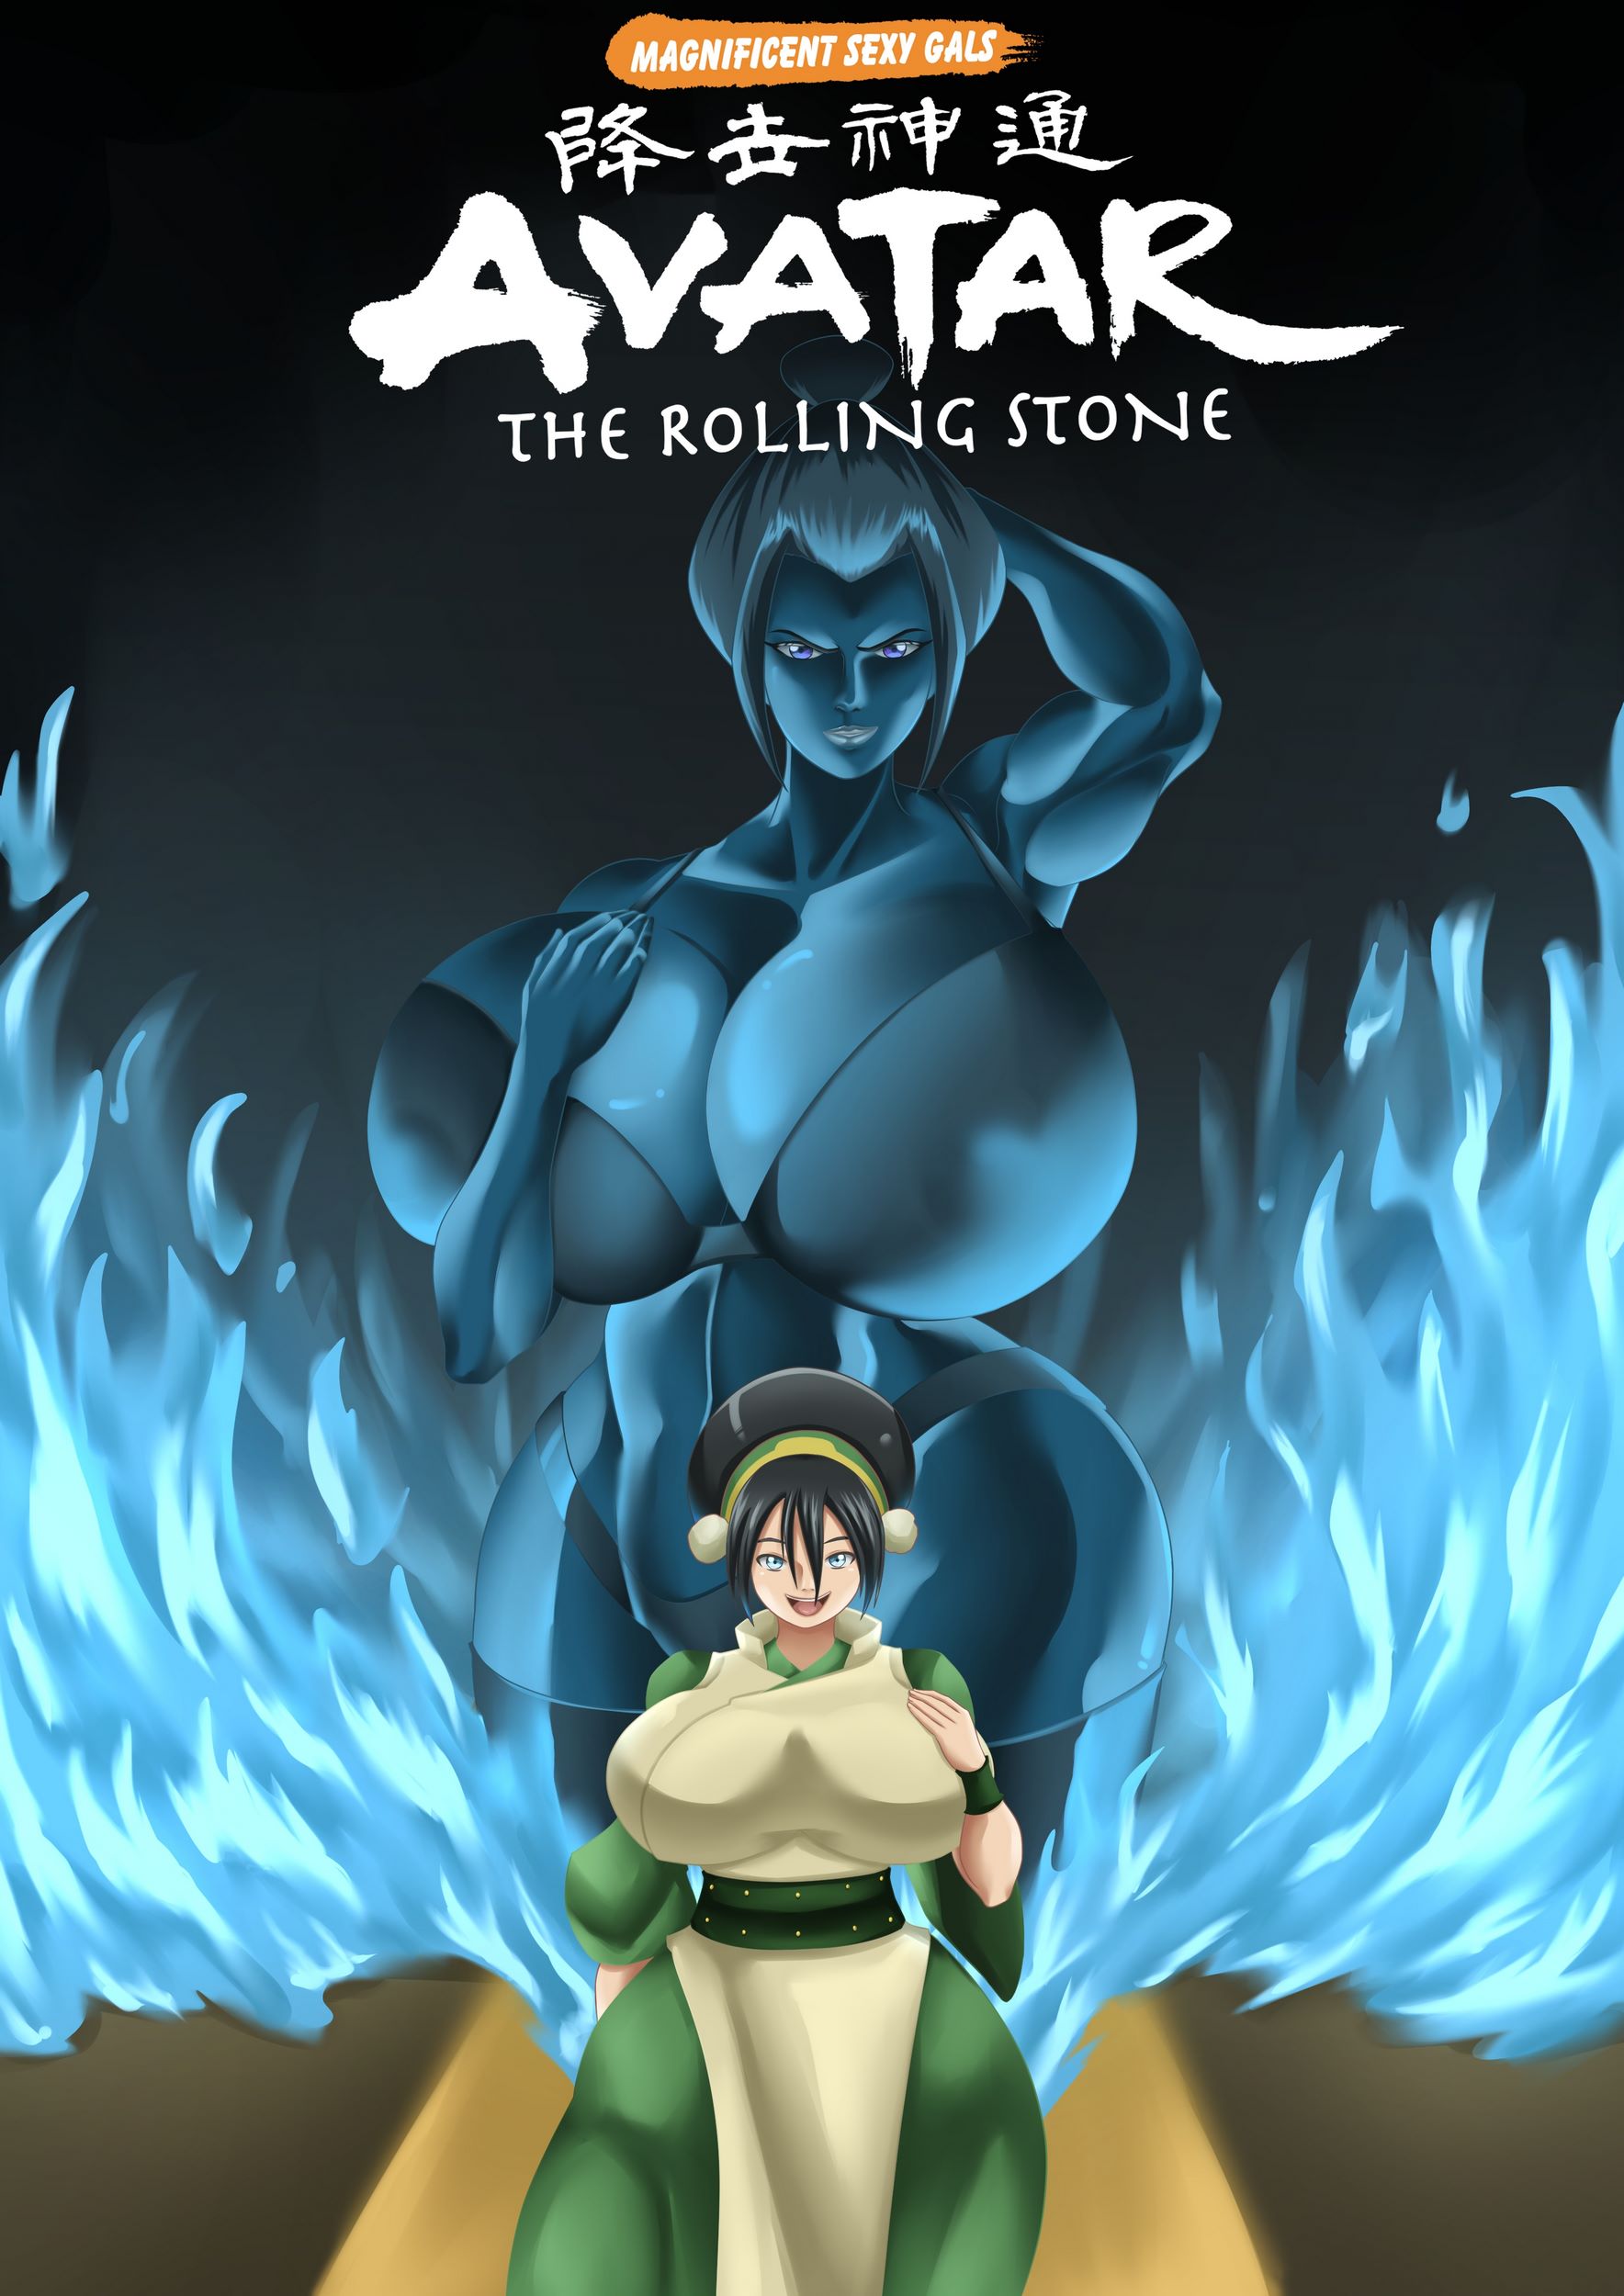 Alien Cartoon Porn Avatar - Avatar: The Rolling Stone [Magnificent Sexy Gals] - Porn Cartoon Comics